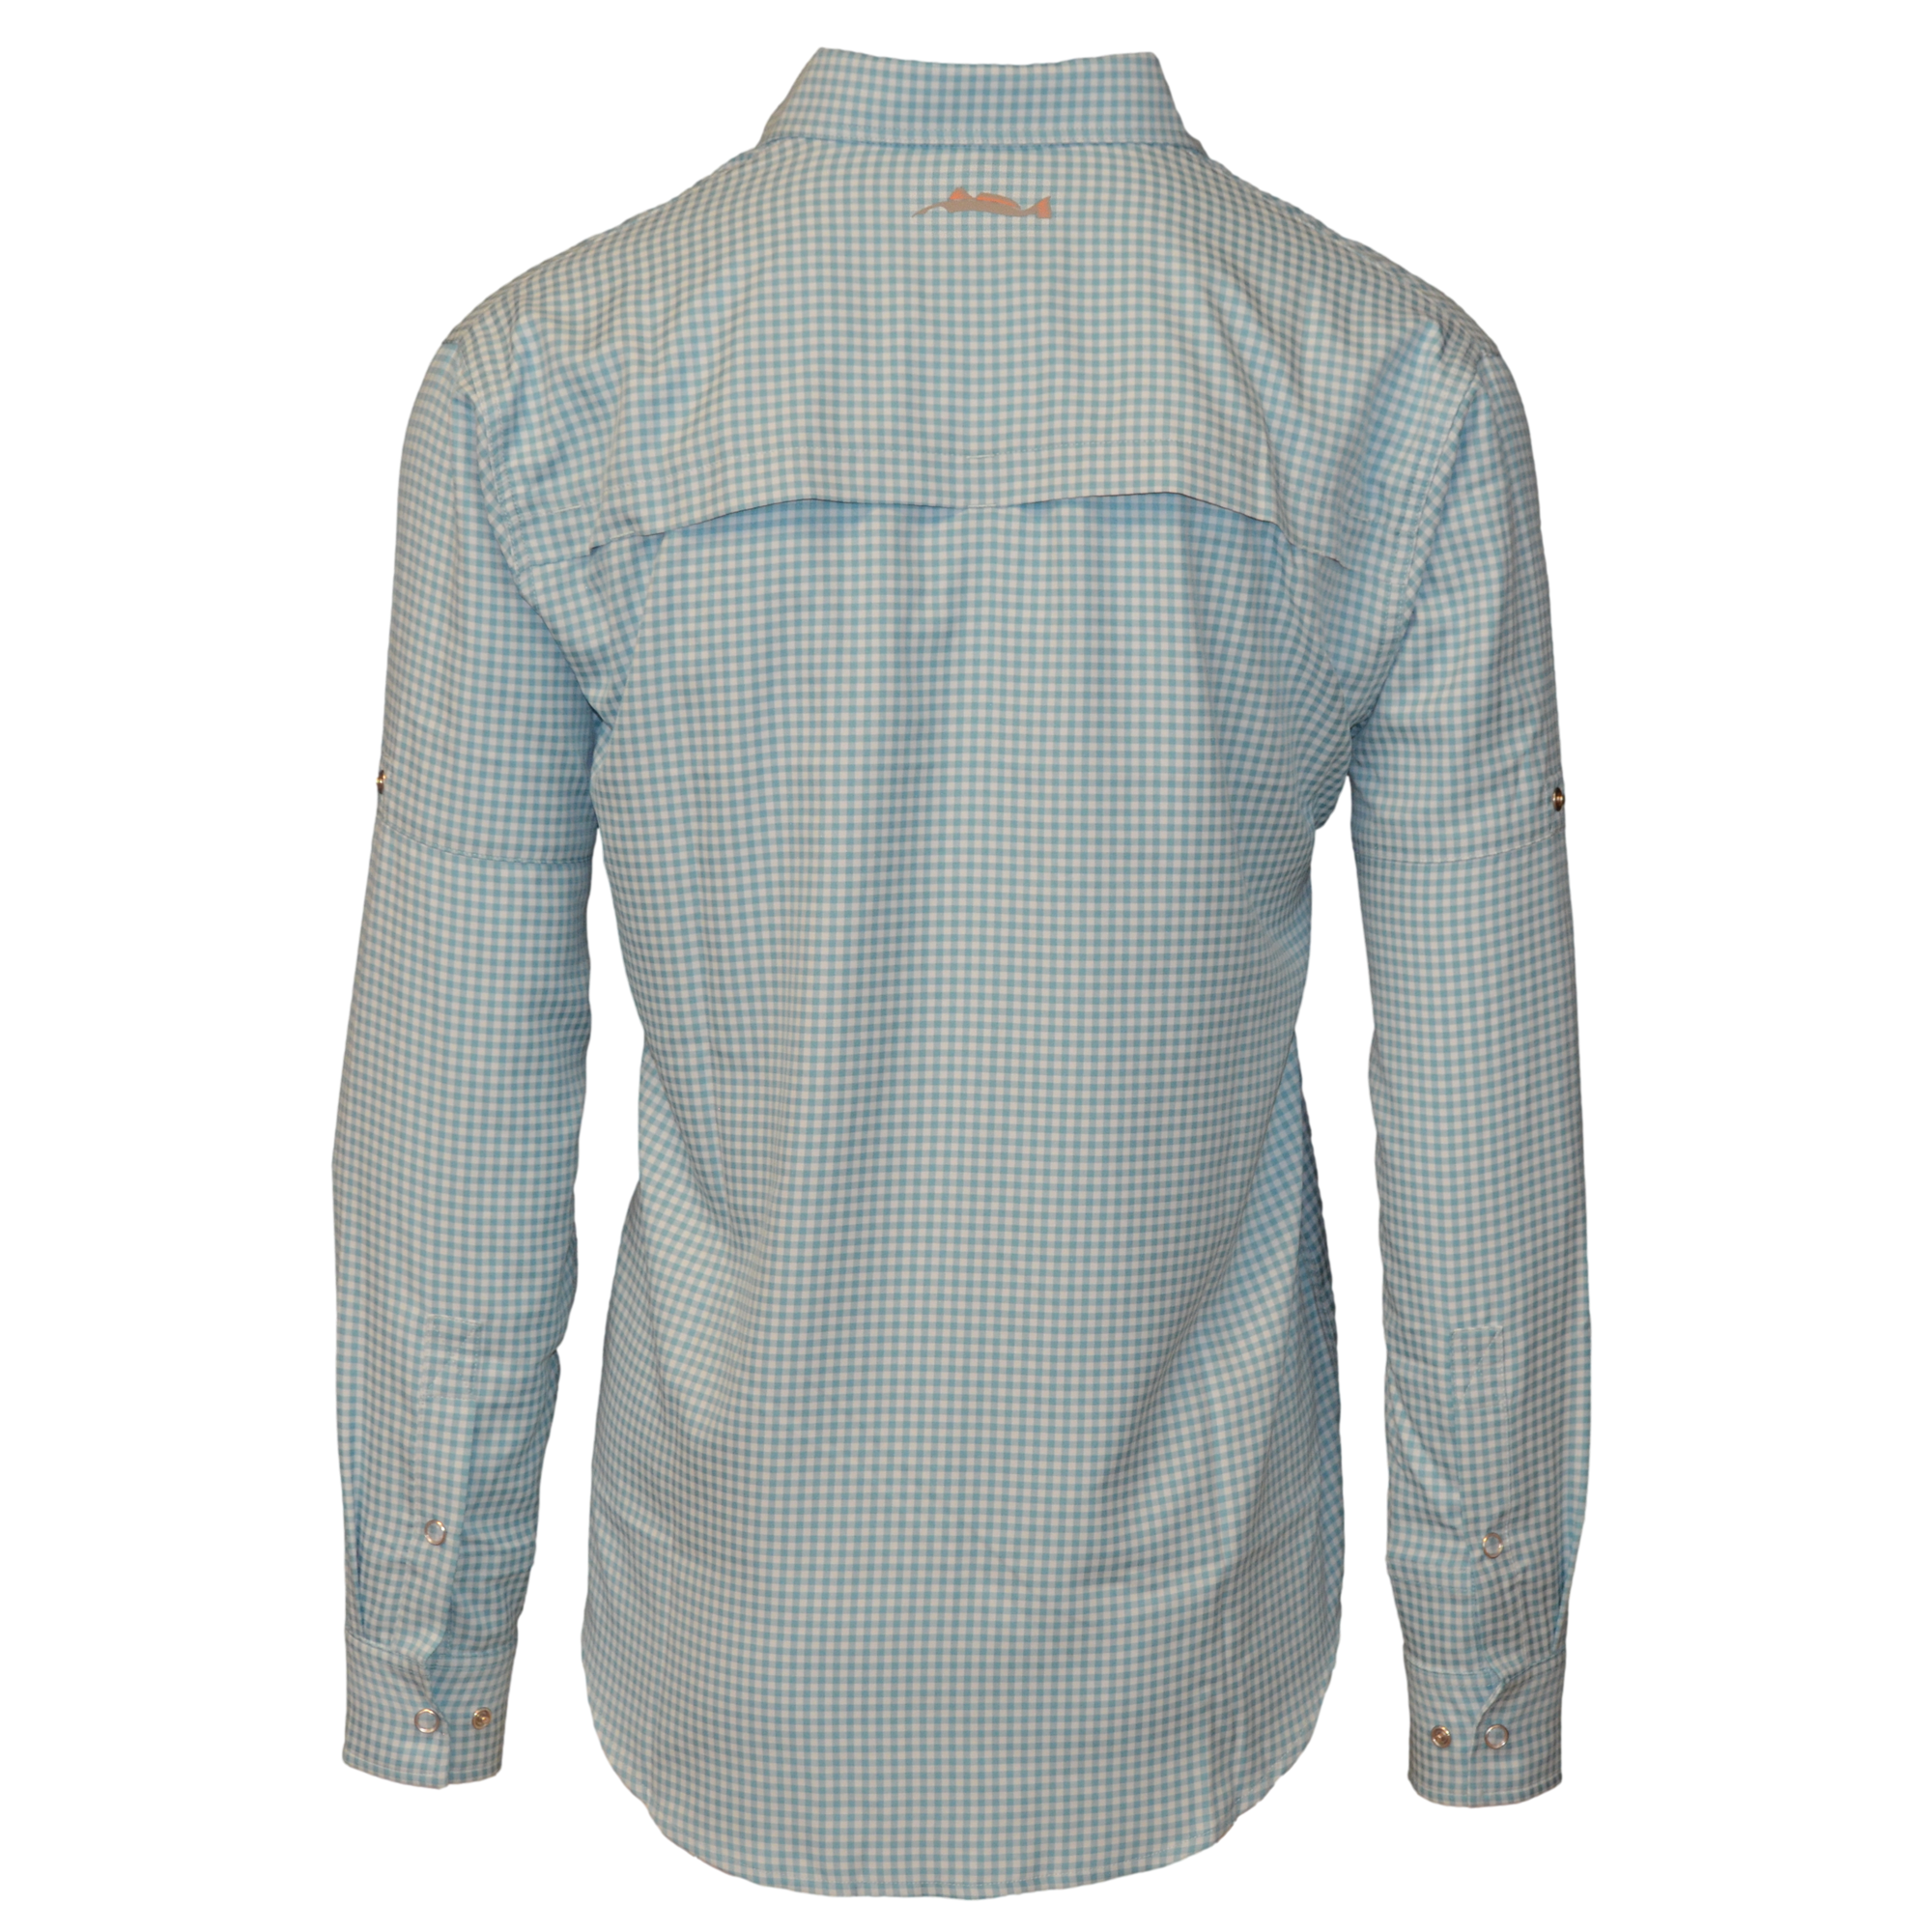 Anomaly Shirt- Blue/Gray Gingham